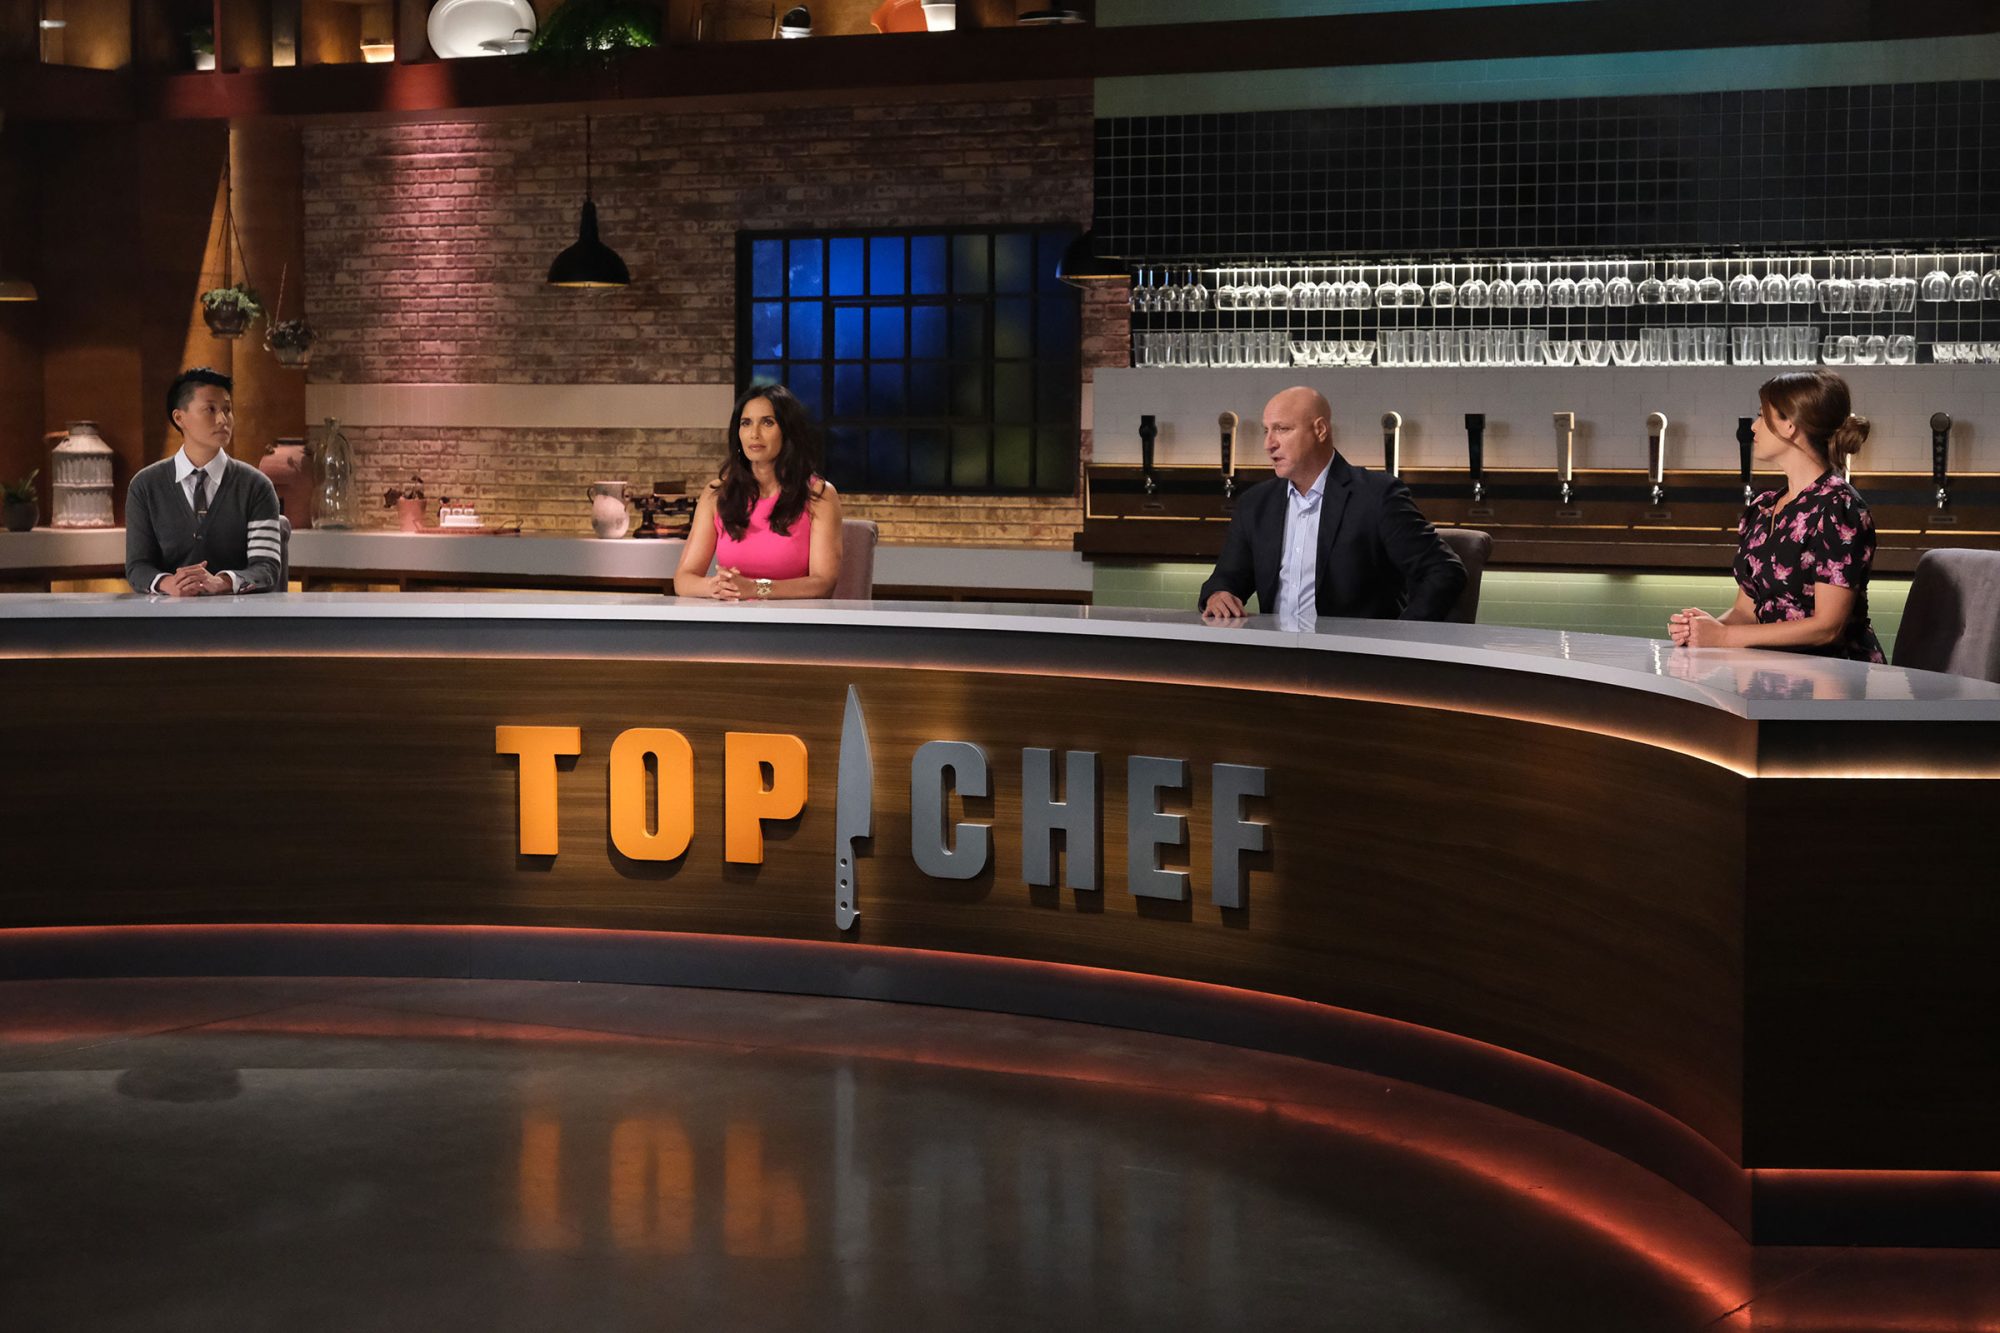 Top Chef 2021 Episode 1 Release Date Top Chef Season 18 Spoilers